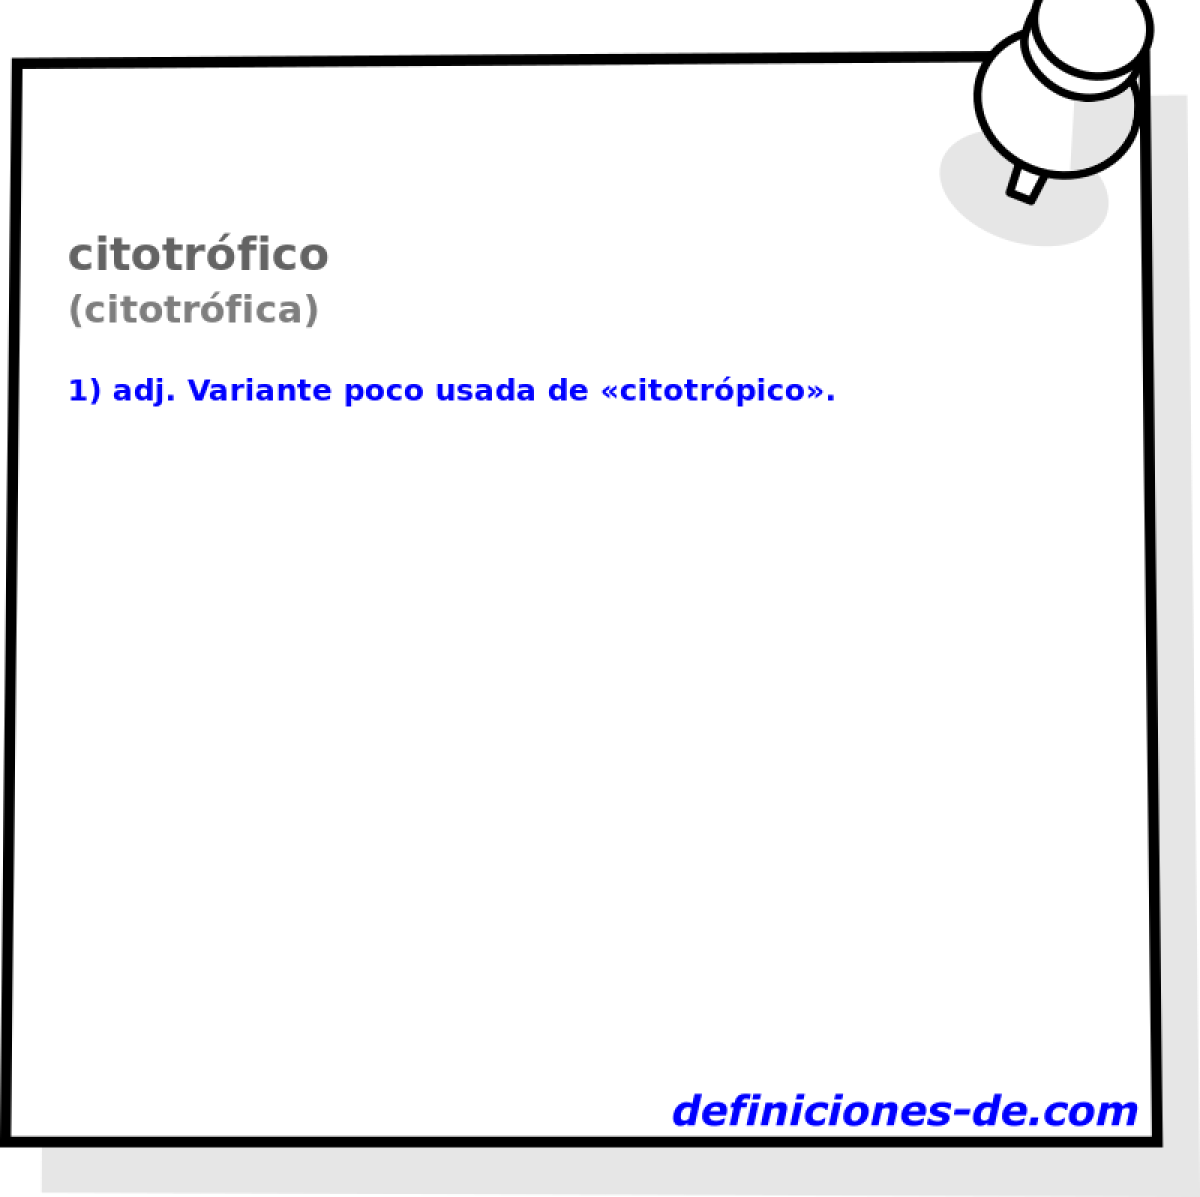 citotrfico (citotrfica)